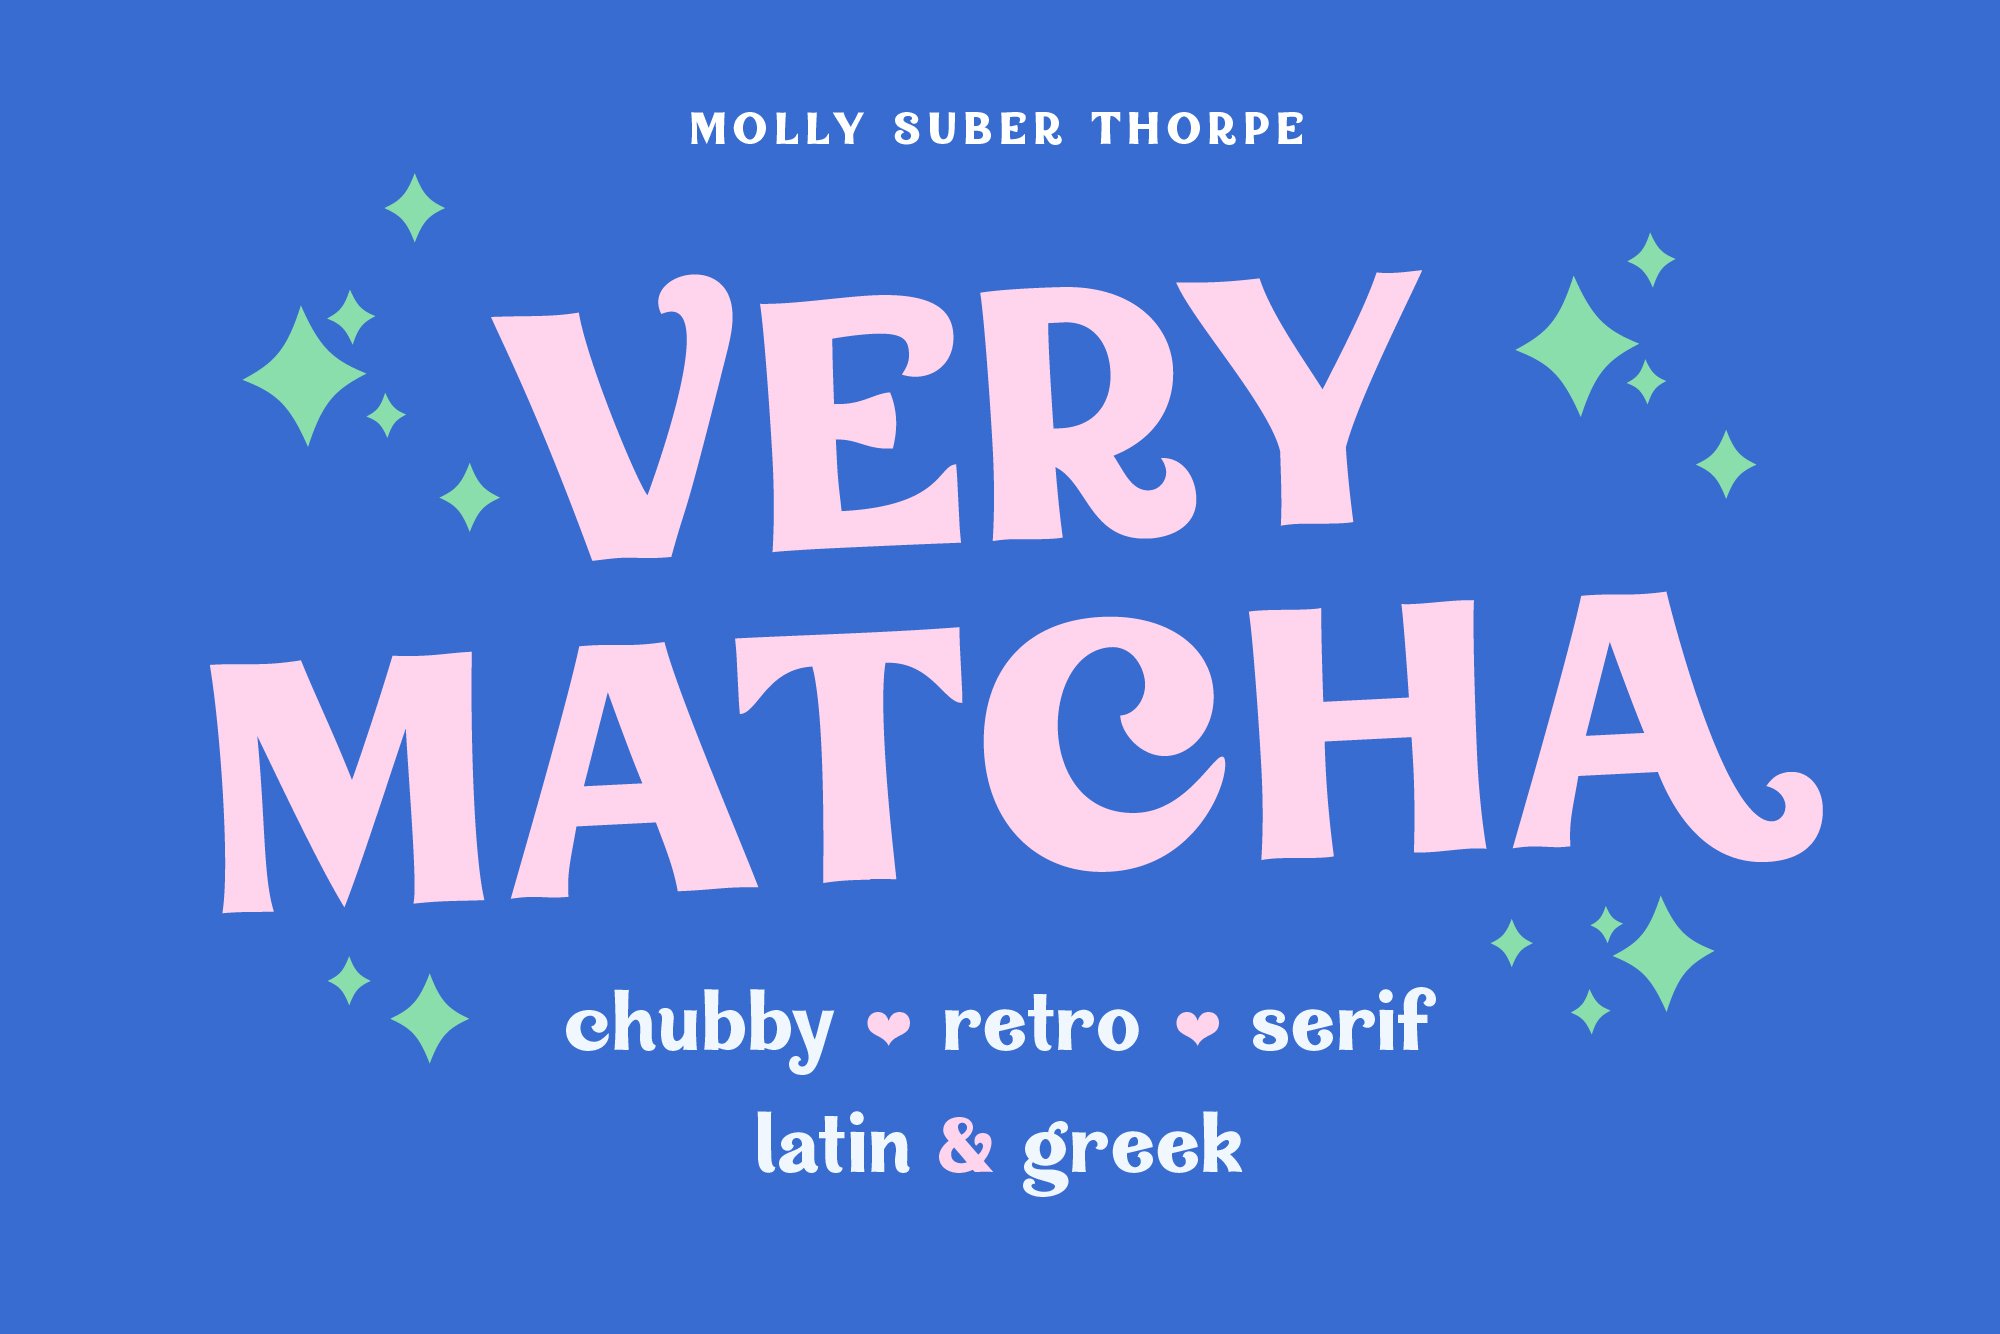 Very Matcha Retro Serif Font cover image.